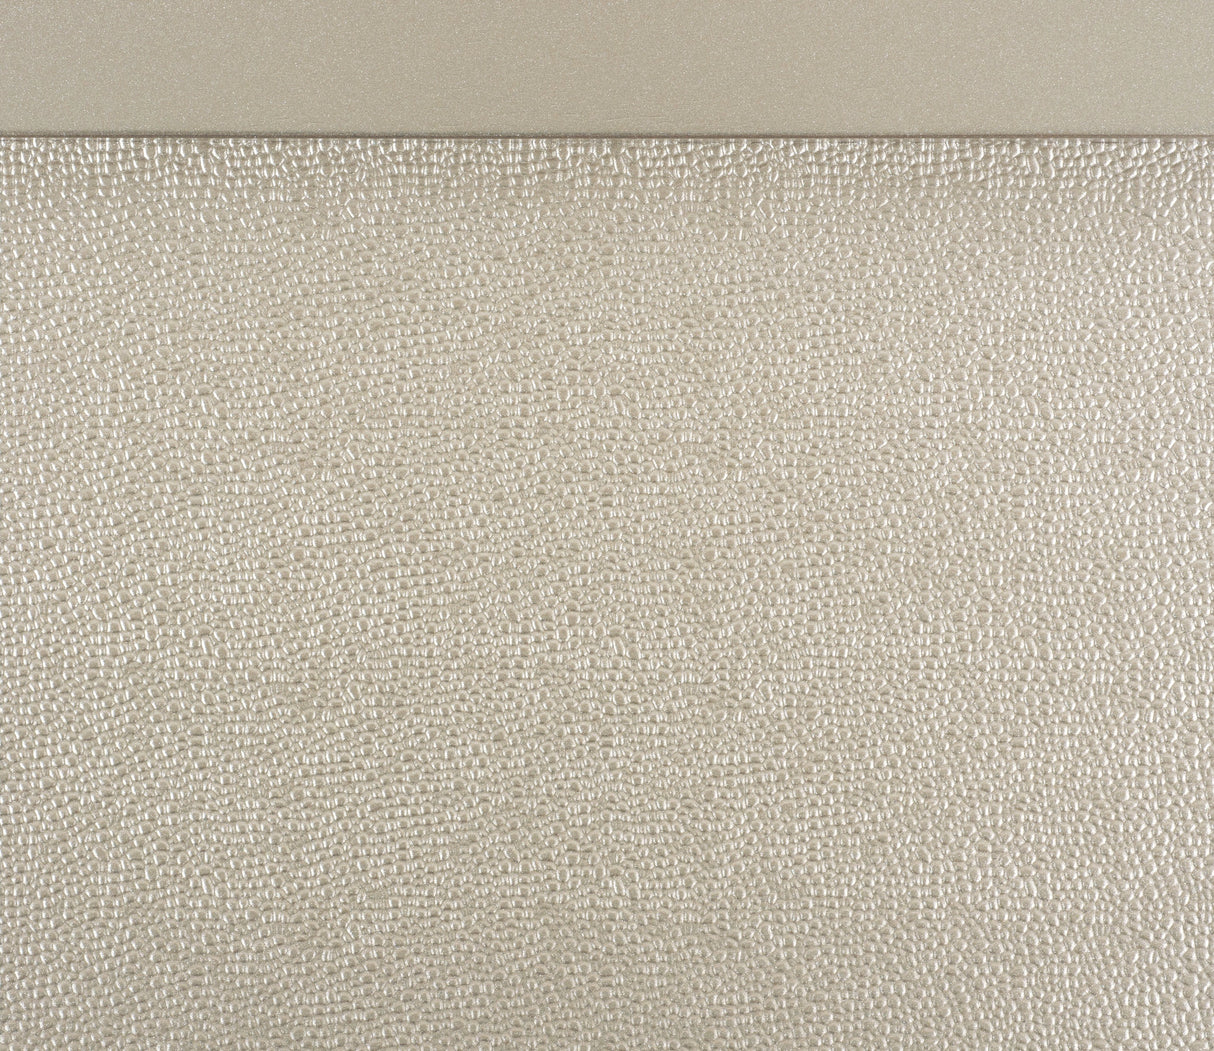 Celandine Silver King Upholstered Panel Bed